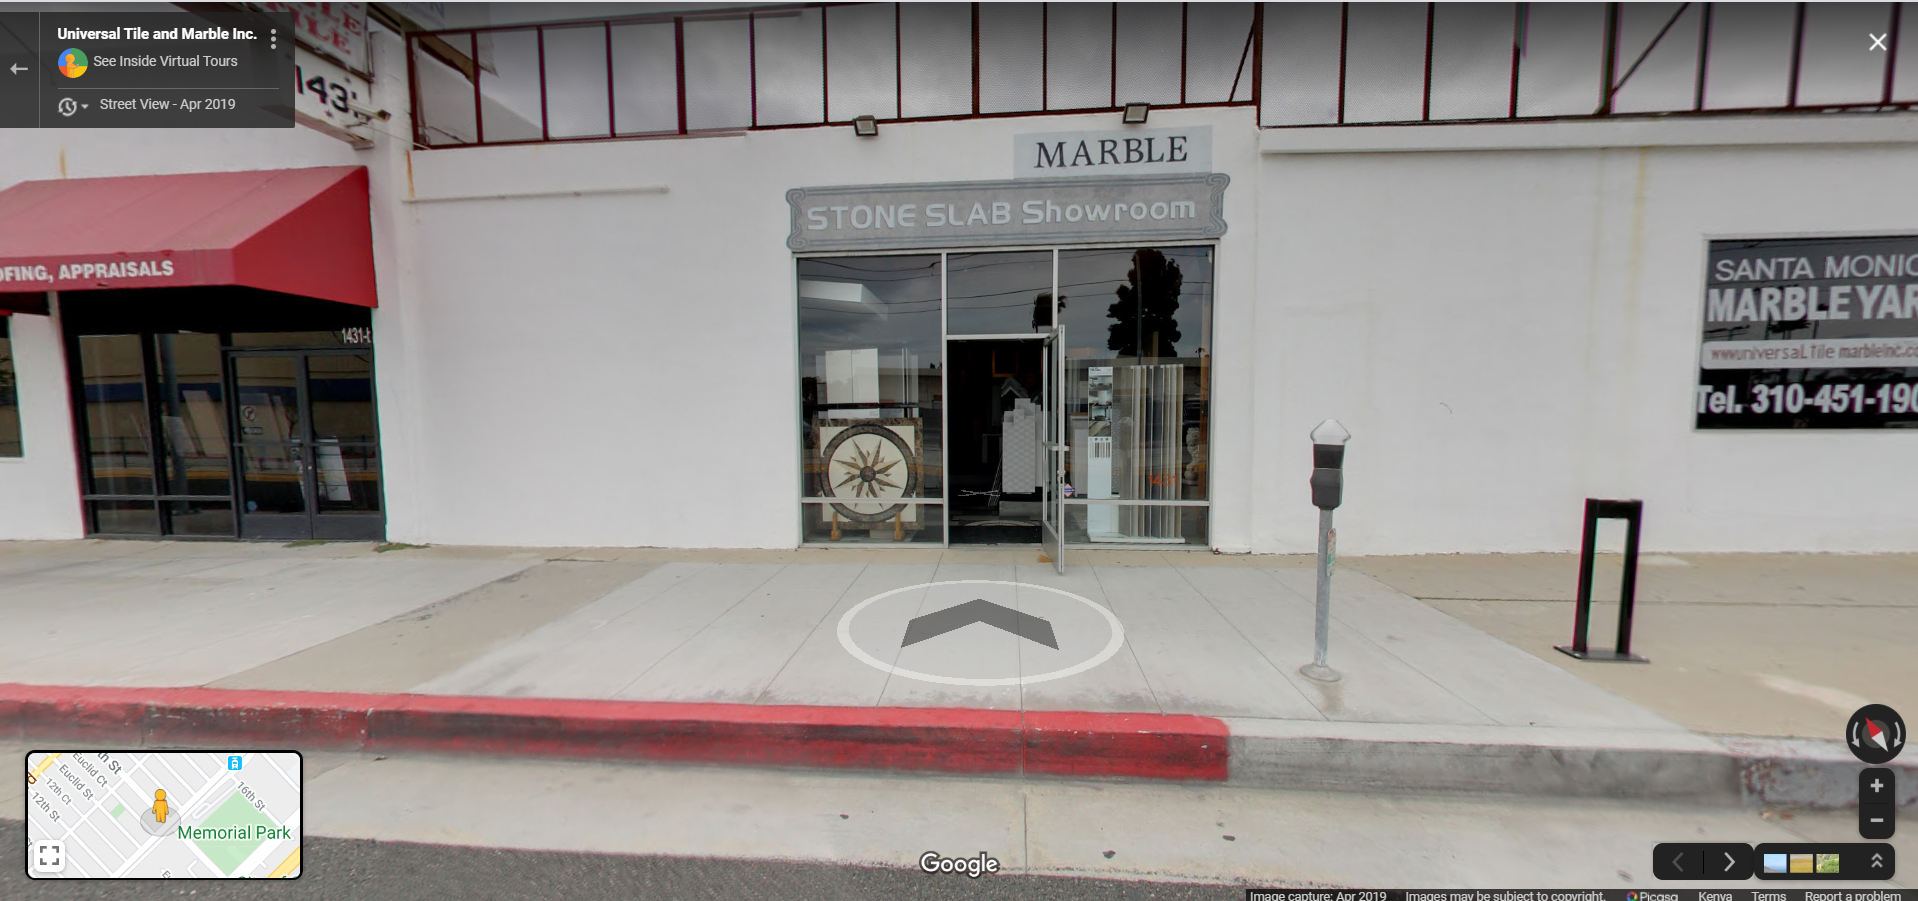 Universal Tile and Marble - Santa Monica